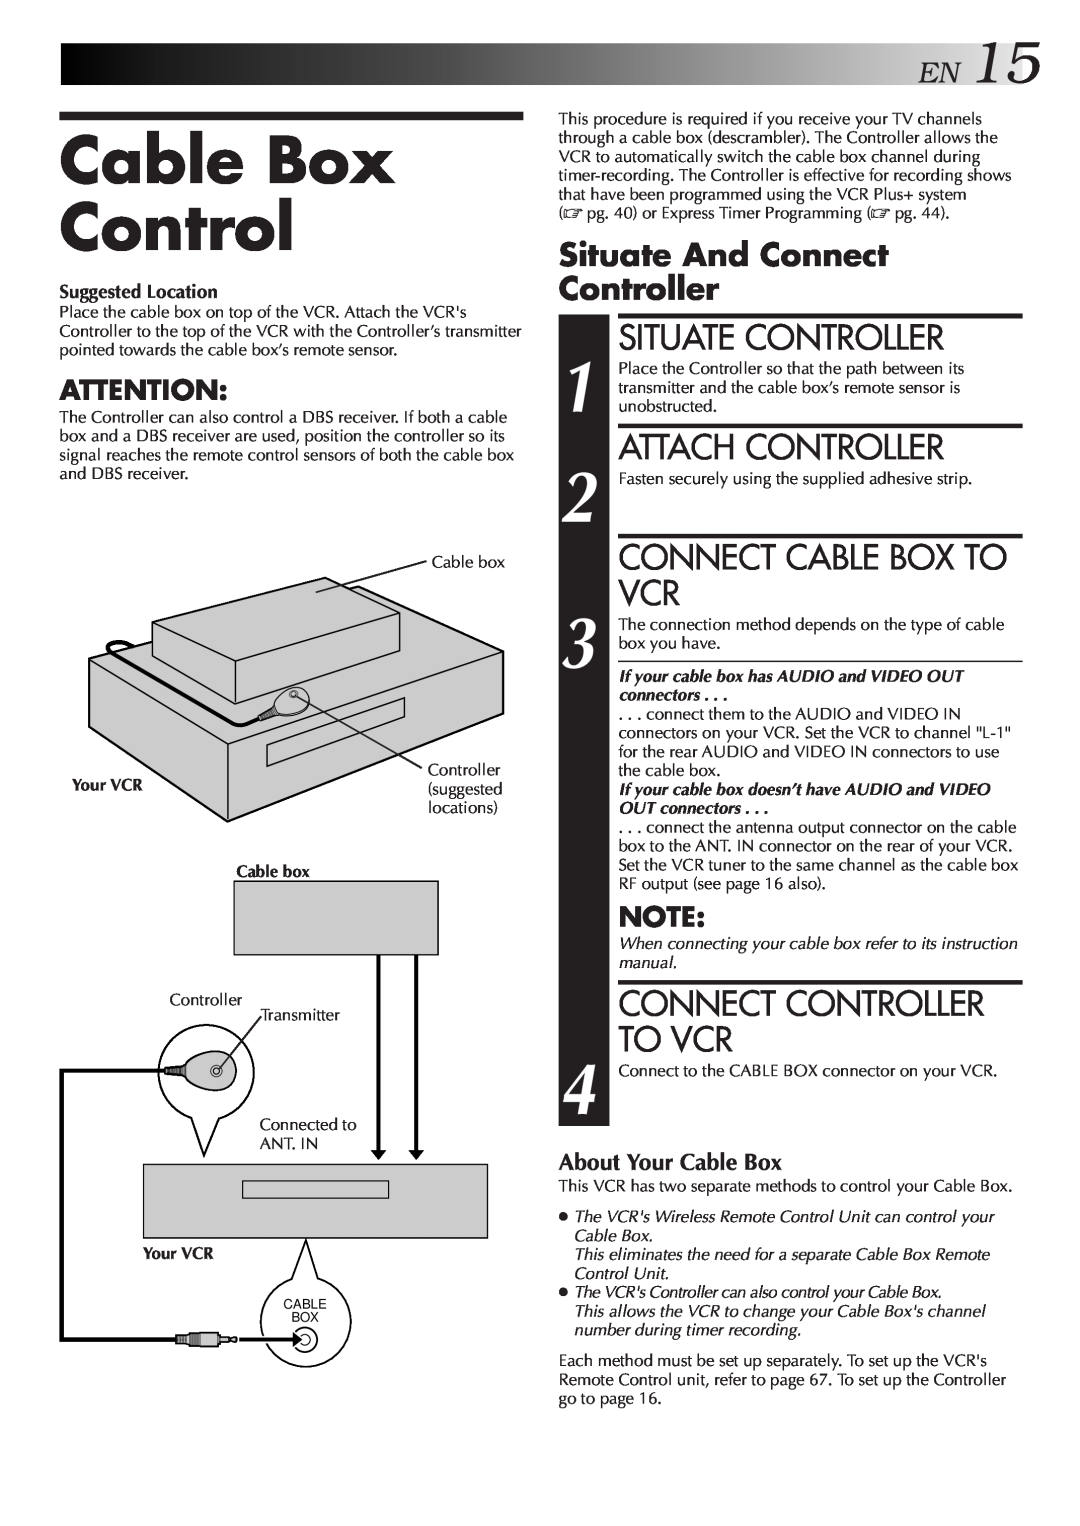 JVC SR-VS10U Cable Box Control, Situate Controller, Attach Controller, Connect Cable Box To Vcr, Connect Controller To Vcr 